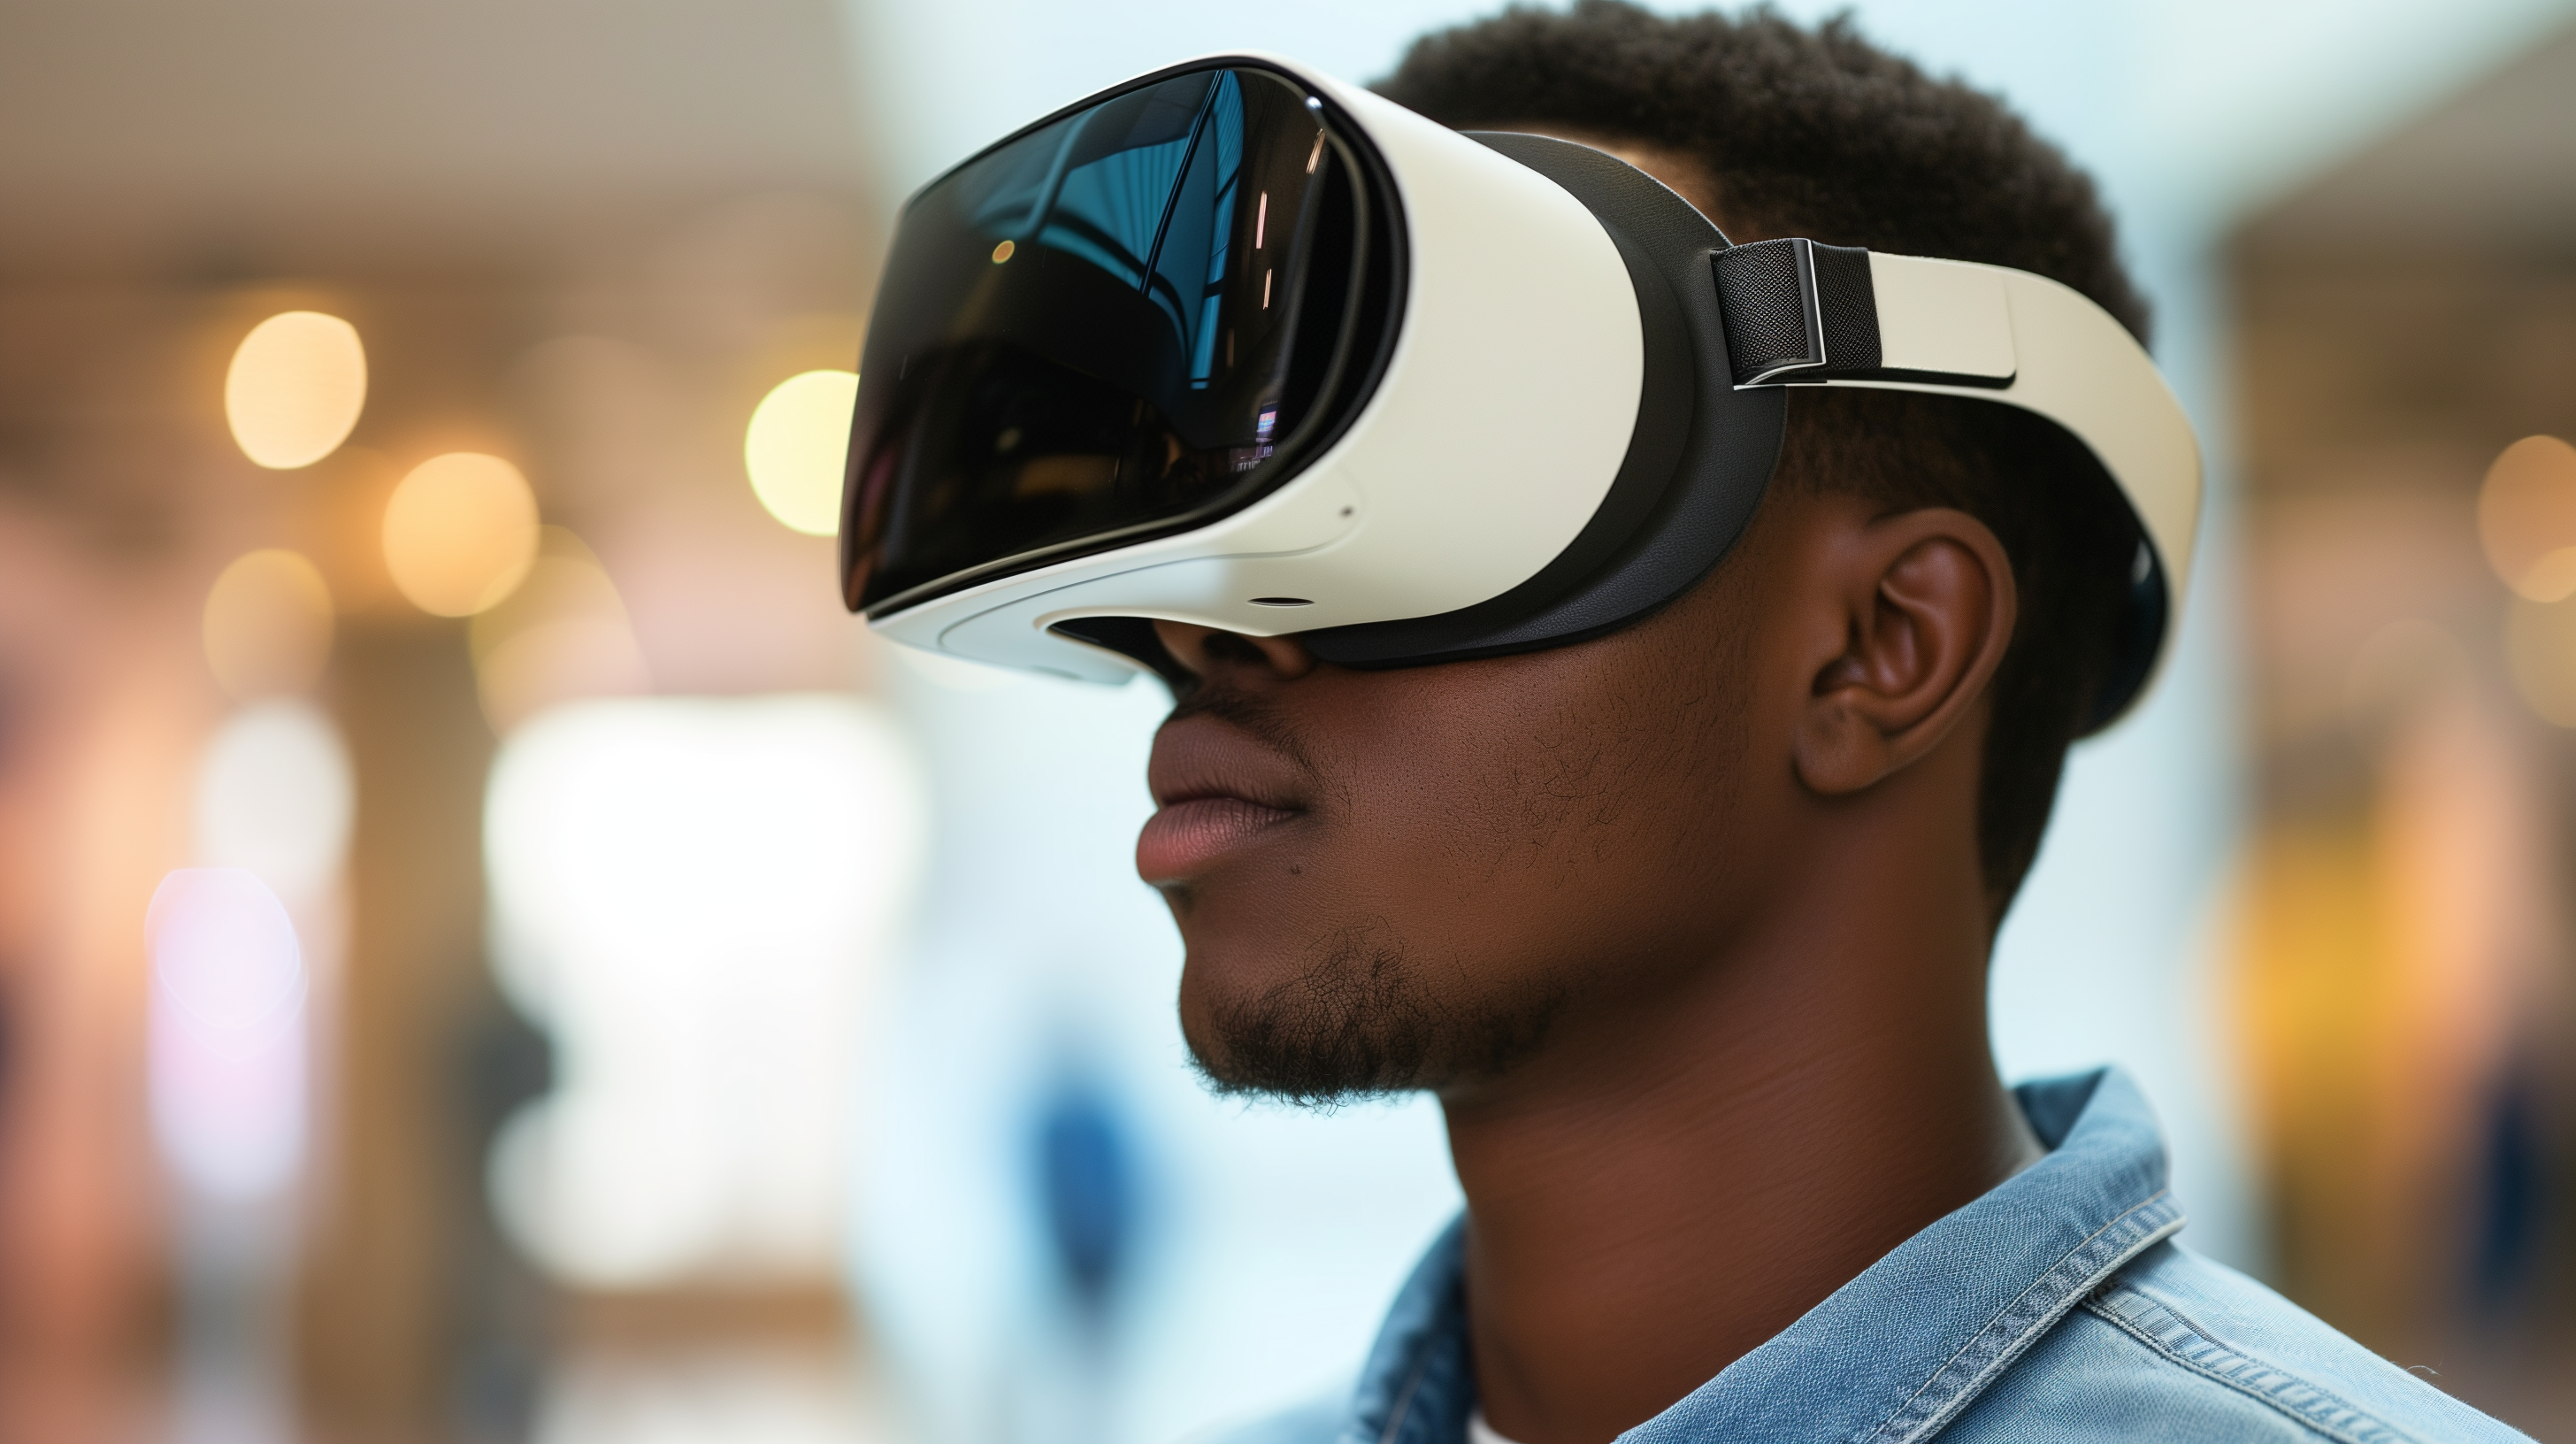 VR Gaming - A Technological Frontier or Digital Desert